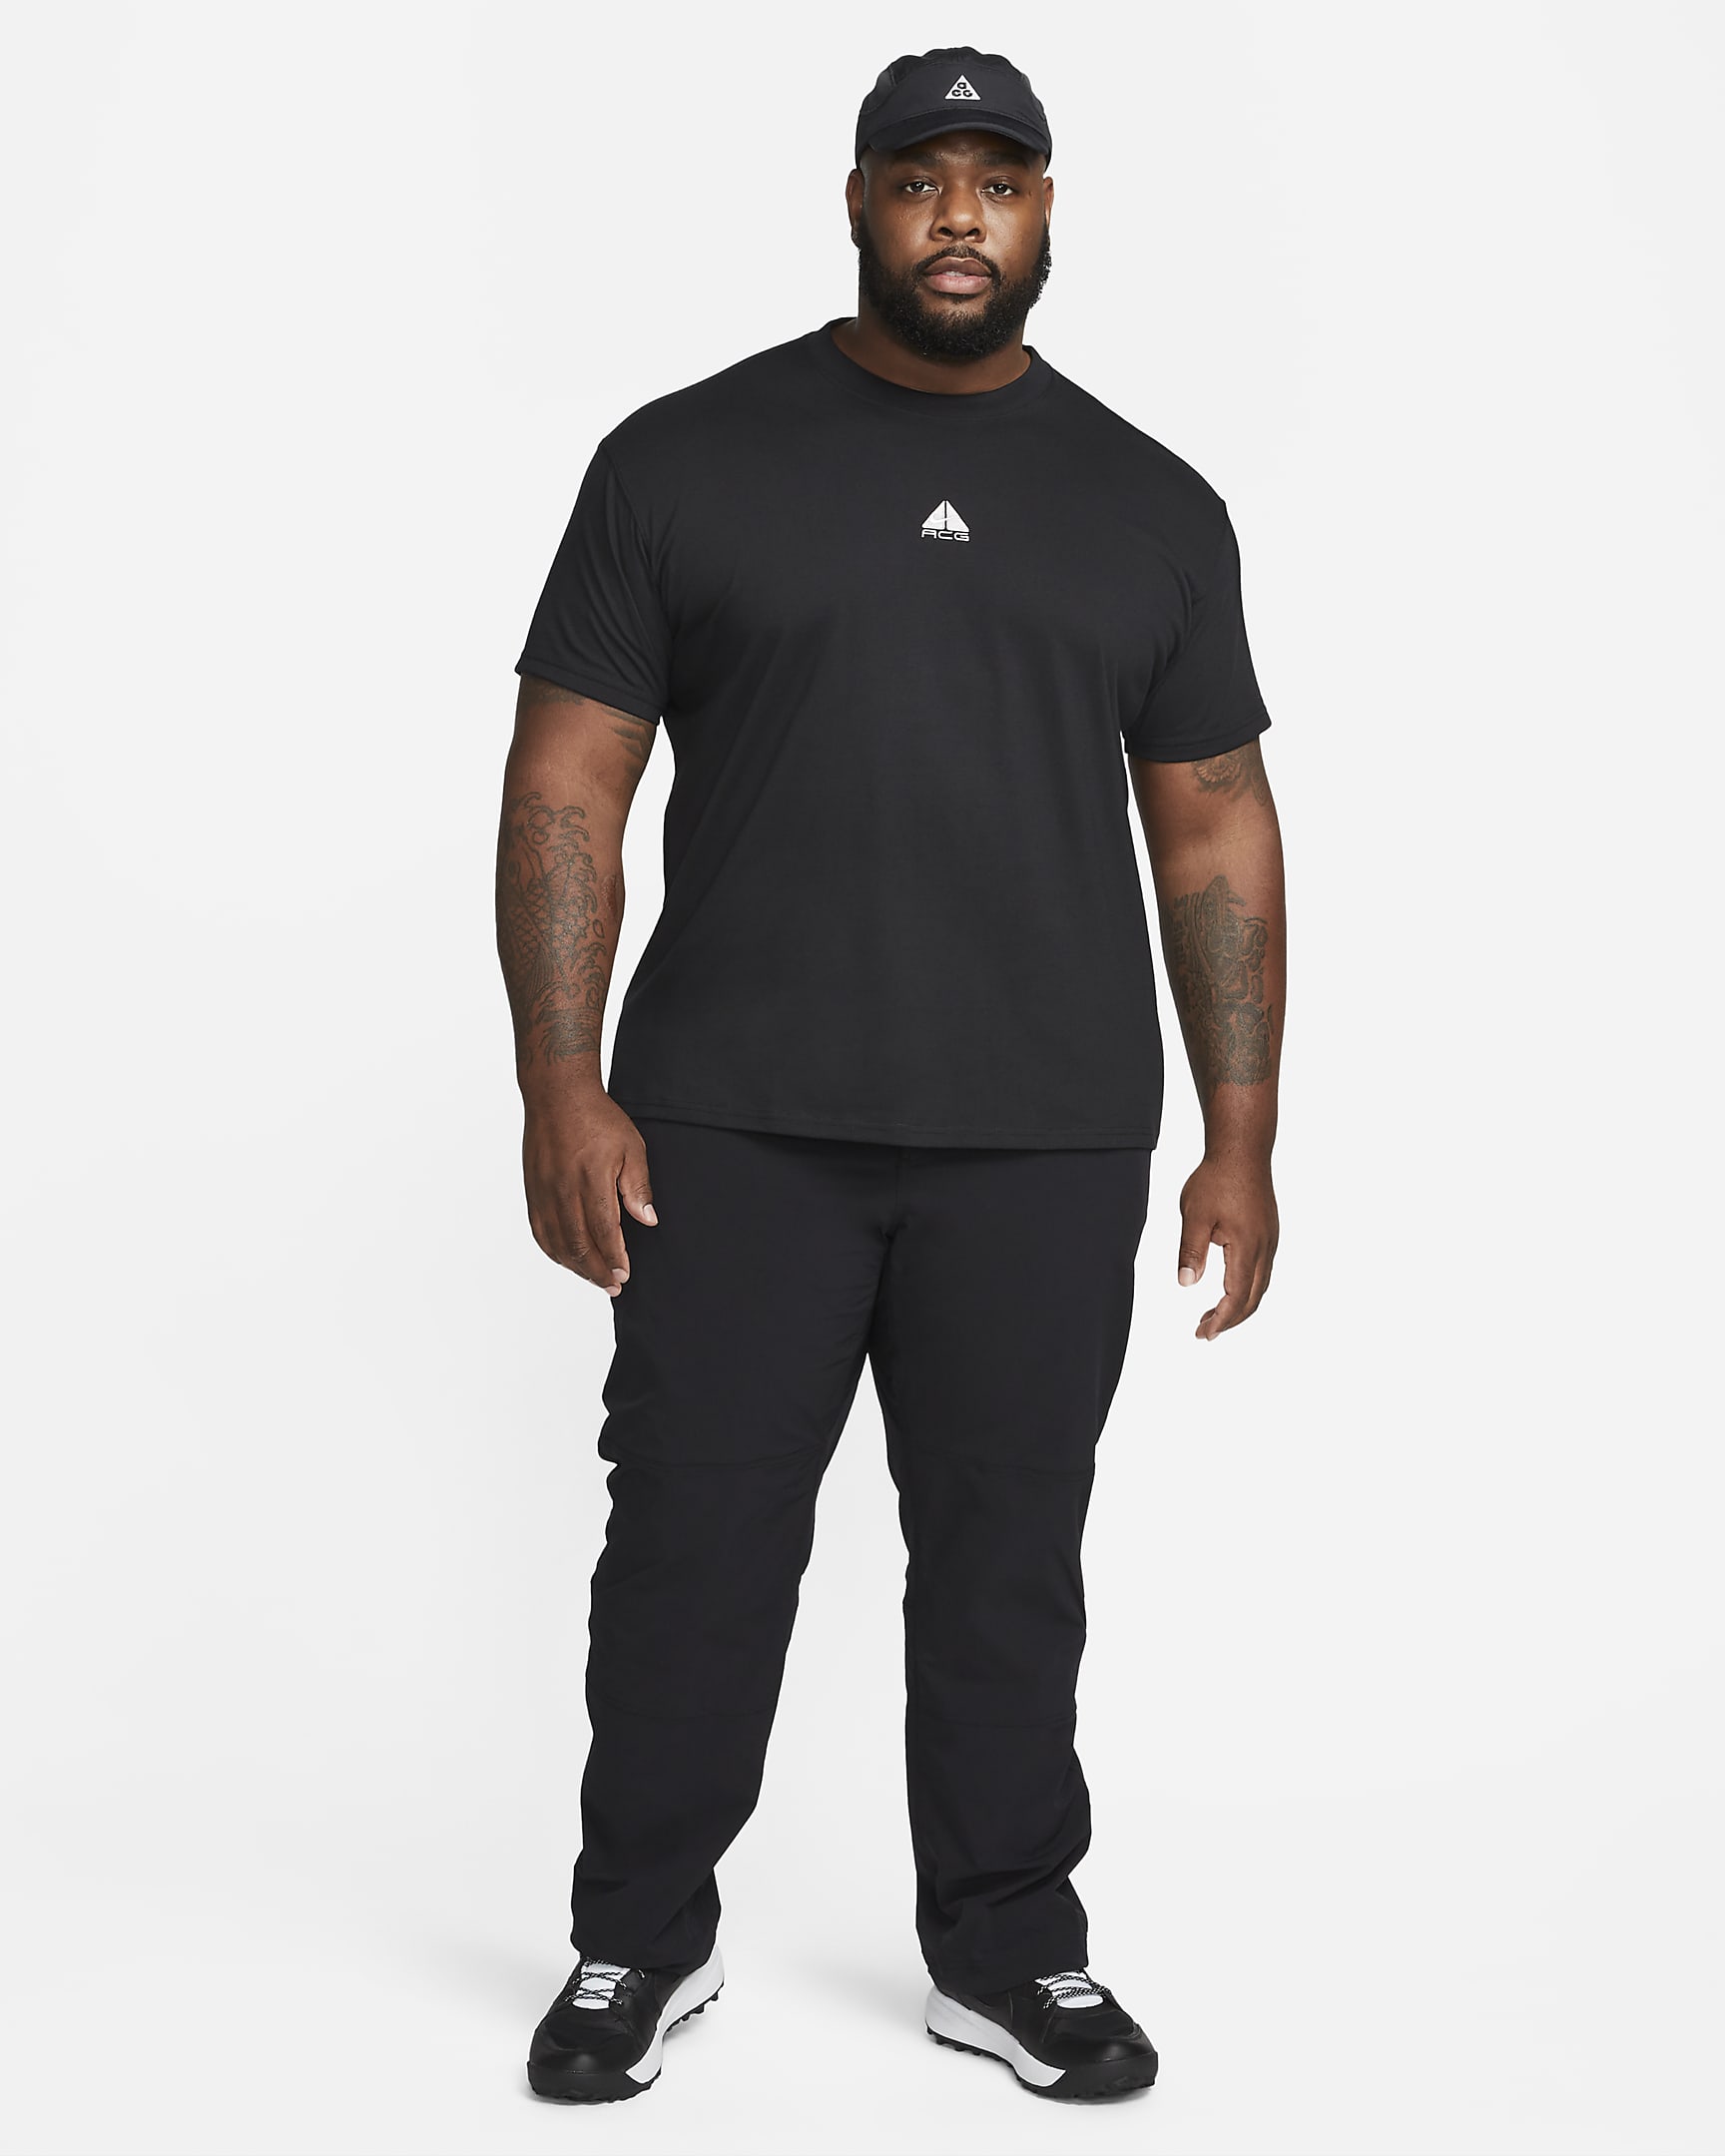 Nike ACG Men's T-Shirt - Black/Light Smoke Grey/Summit White